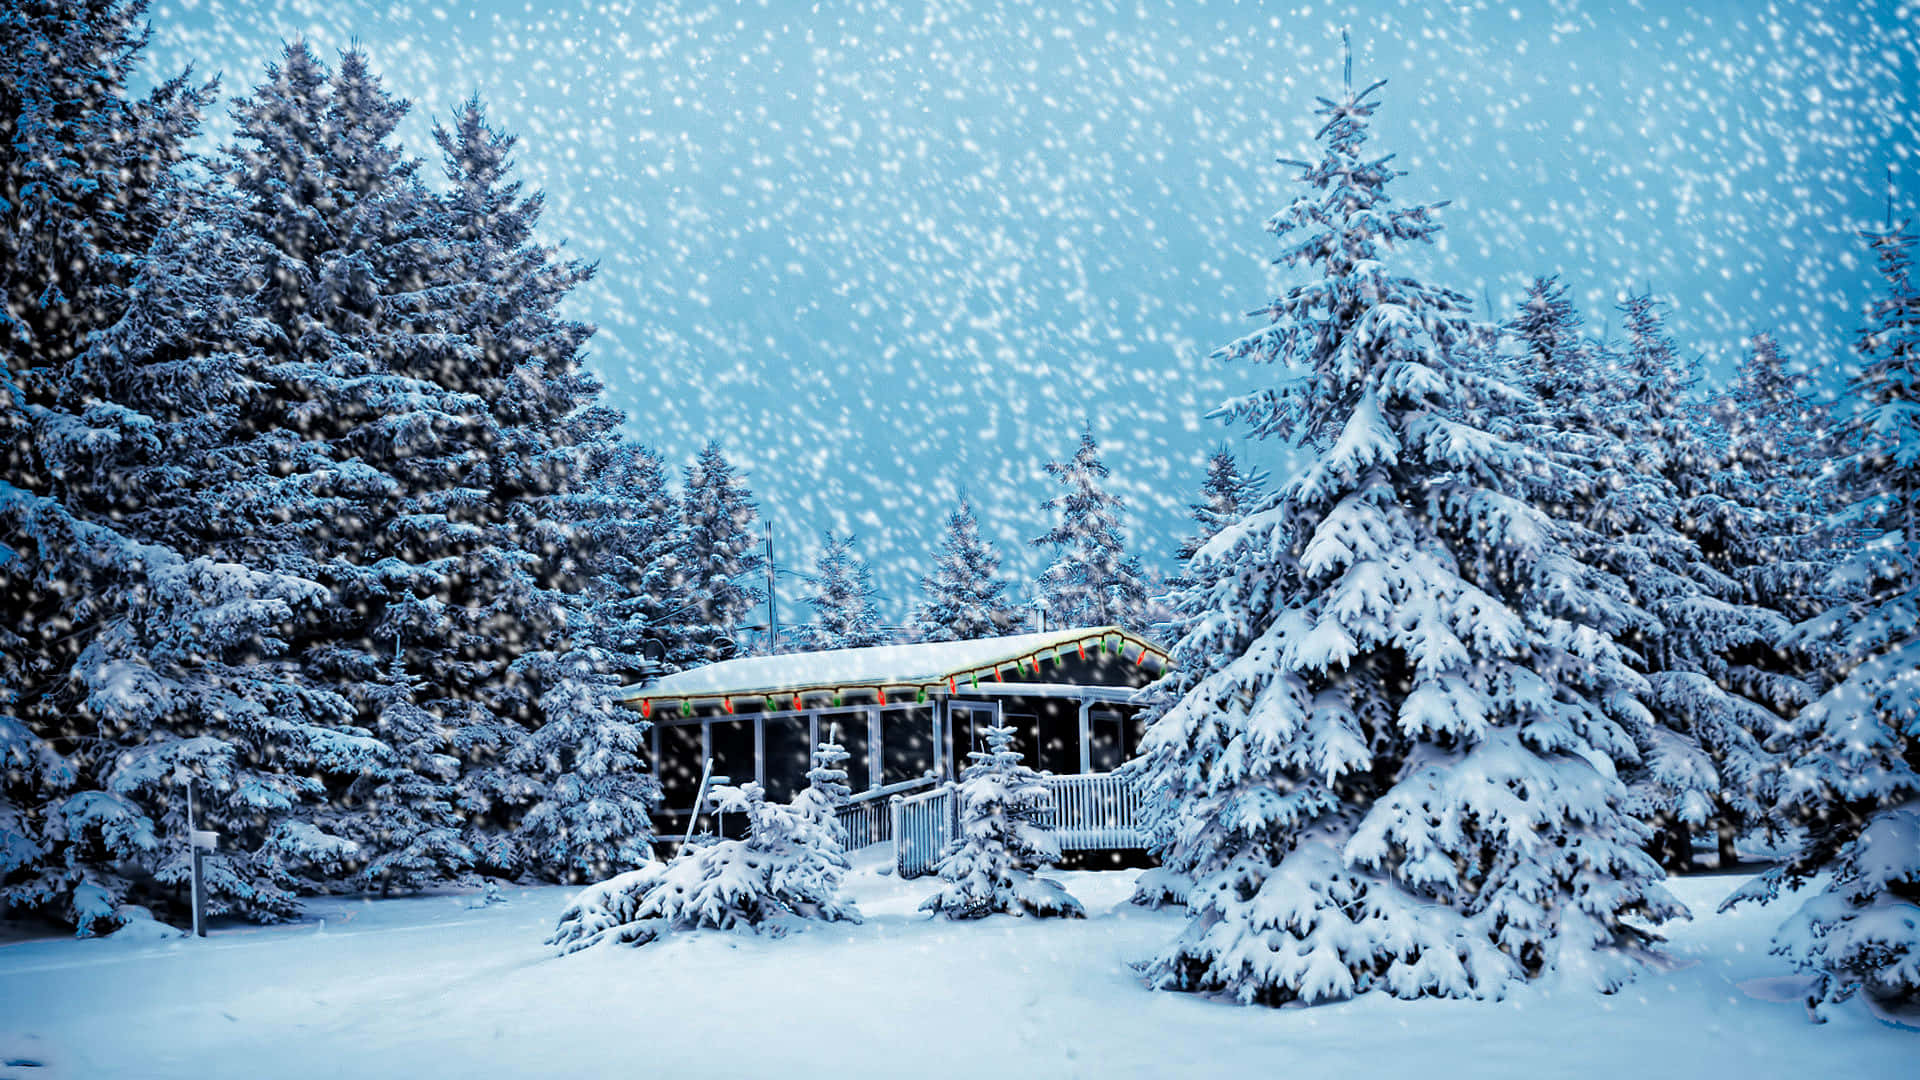 Enjoy A Snow-covered Winter Wonderland Background